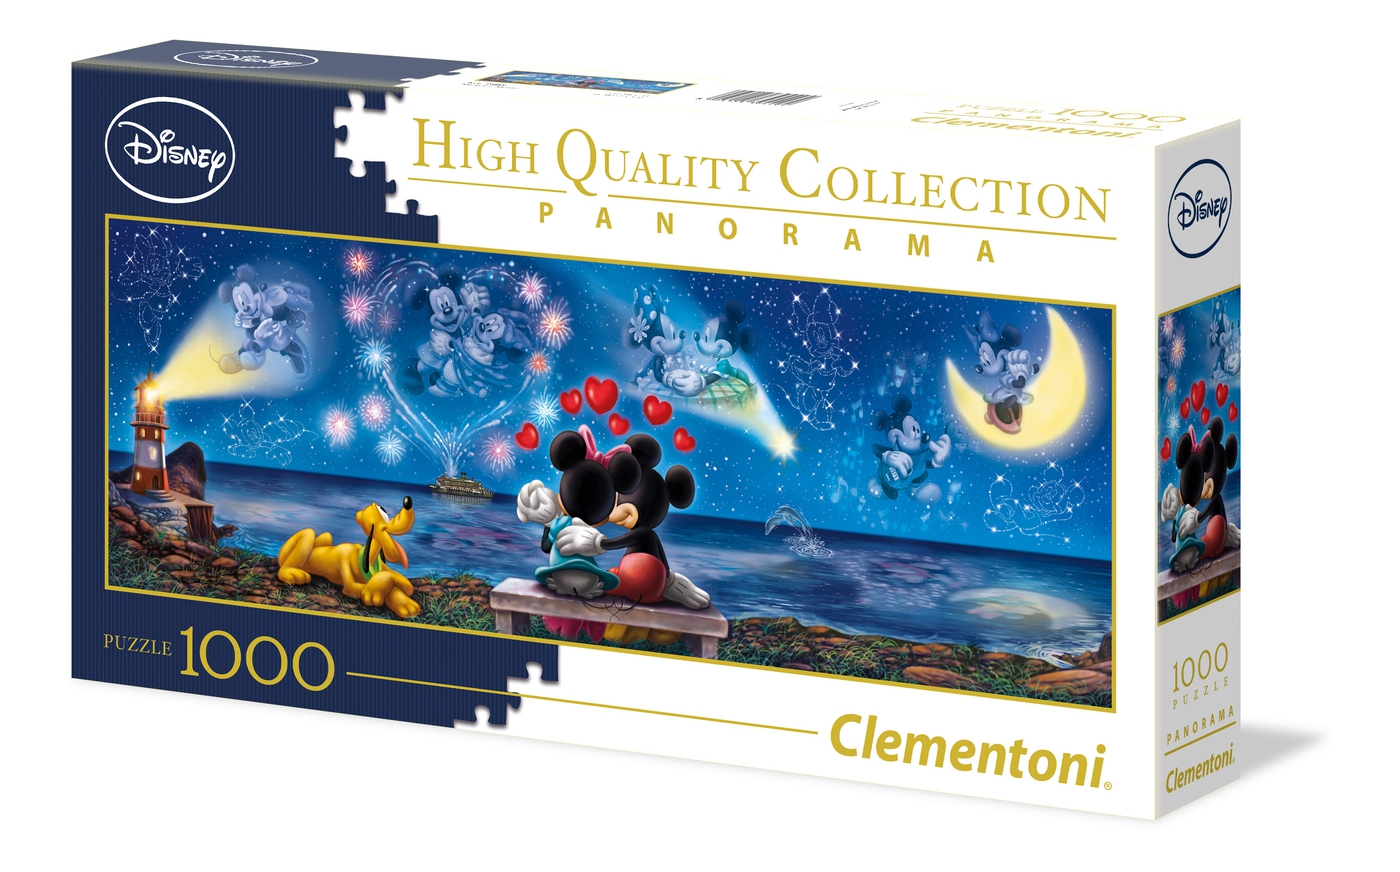 Clementoni Panorama Puzzle 1000 Teile Disney Pixar Cars Micky Maus High Quality 